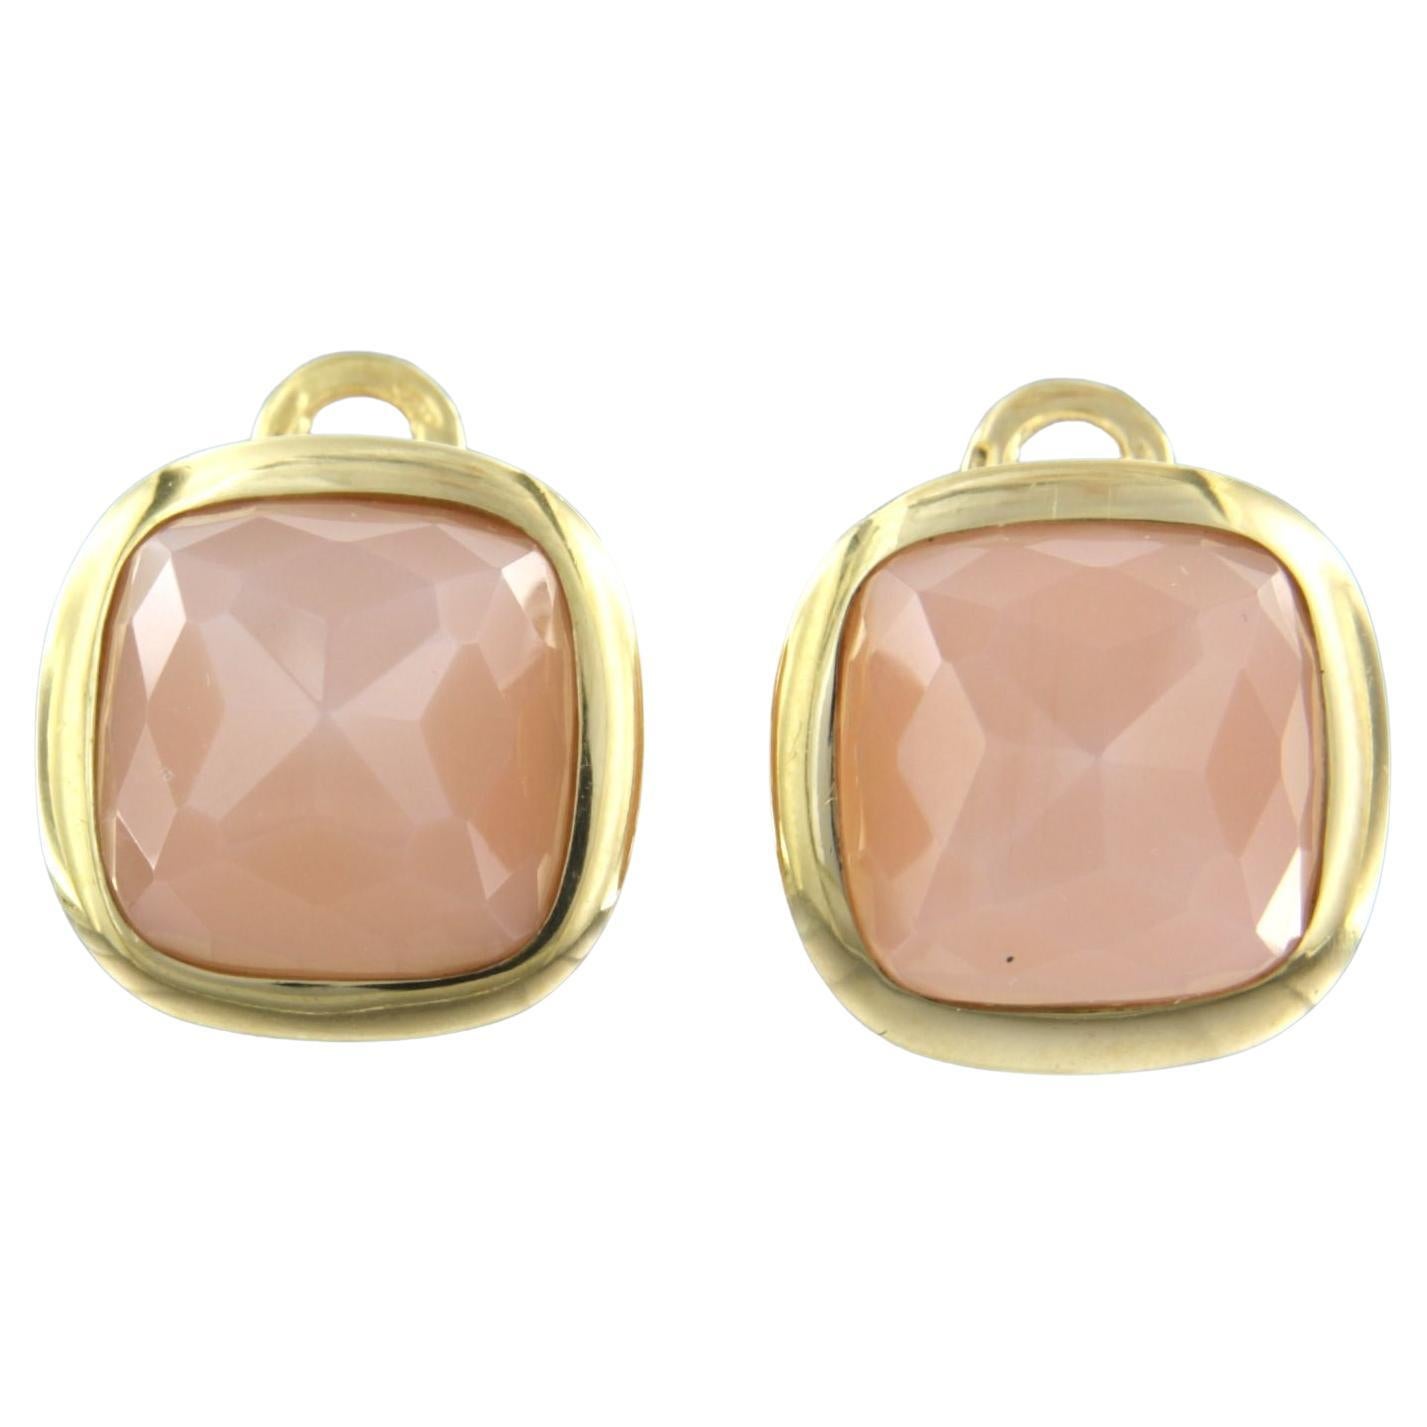 18k yellow gold ear clips set with pink quartz - size 1.8 cm x 1.8 cm